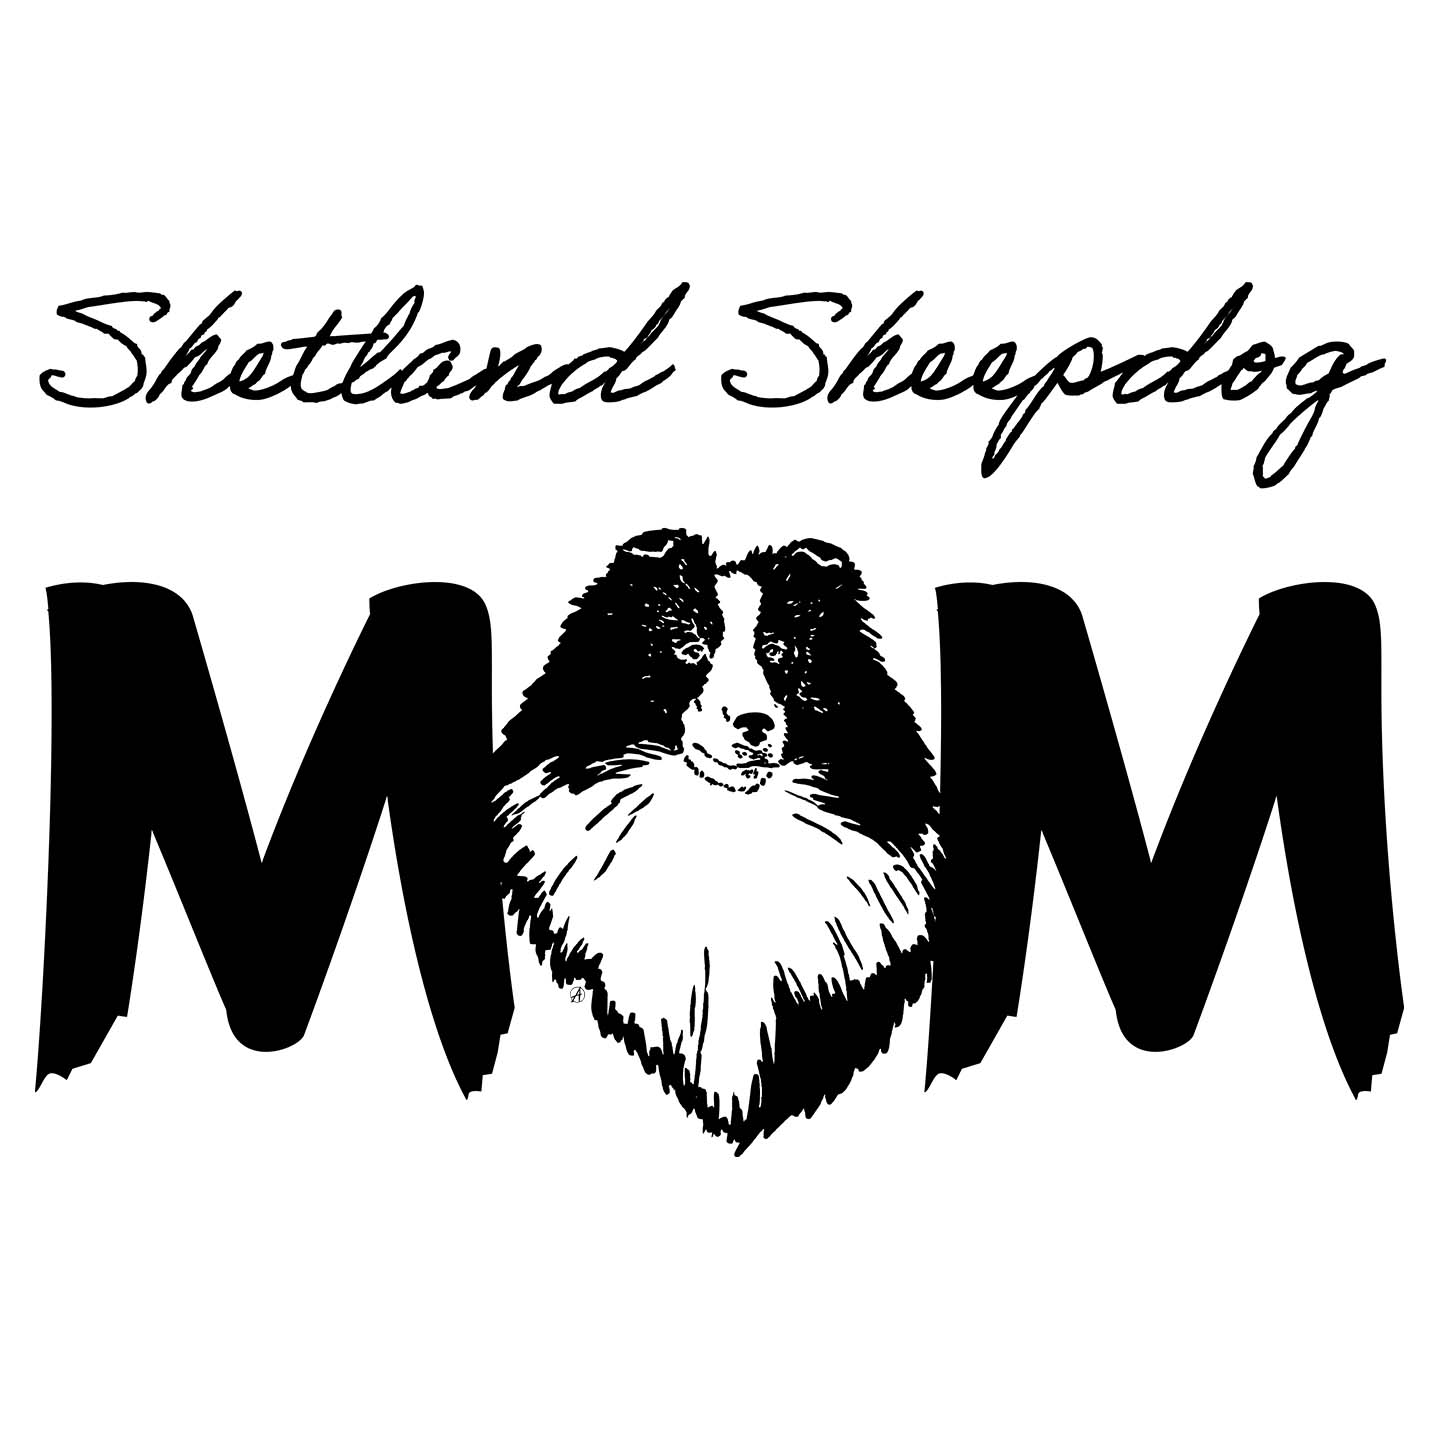 Shetland Sheepdog Breed Mom - Women's V-Neck T-Shirt